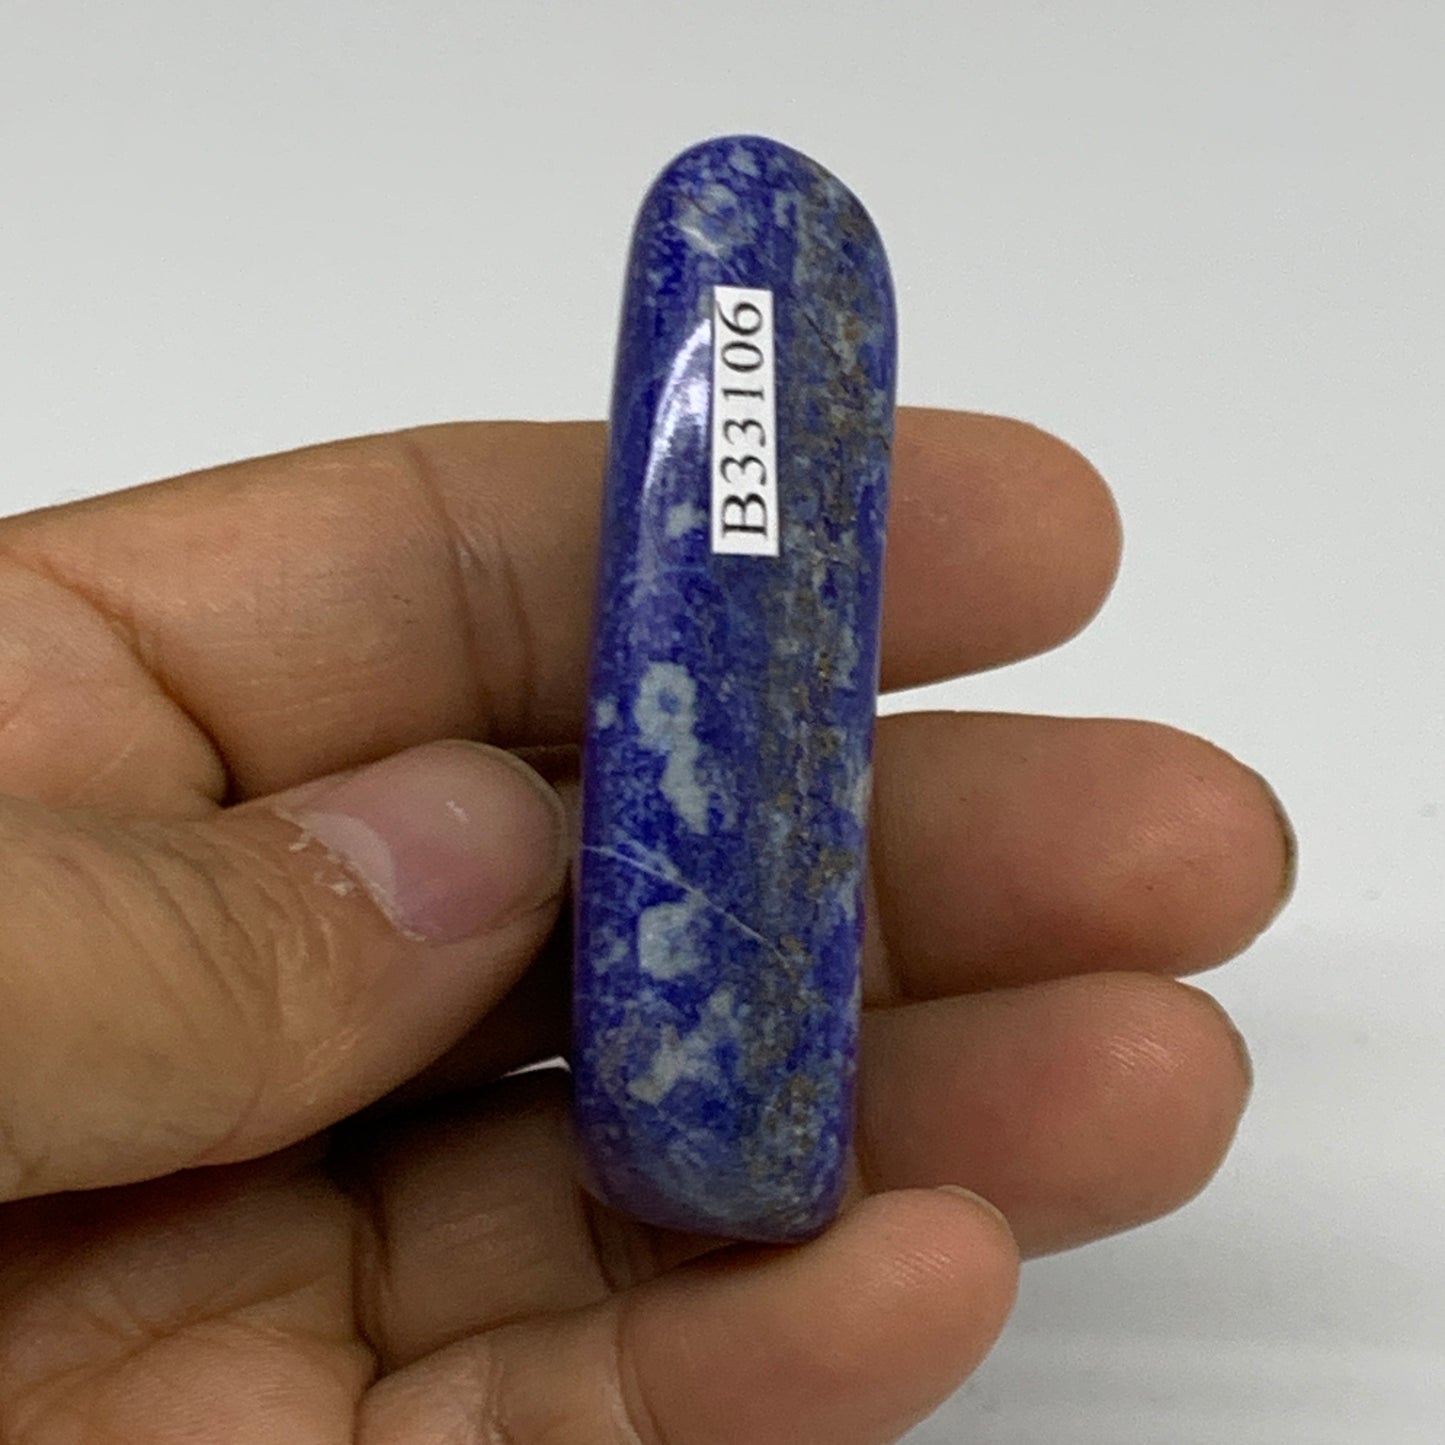 65.7g, 2.3"x1.3"x0.6",  Natural Freeform Lapis Lazuli from Afghanistan, B33106